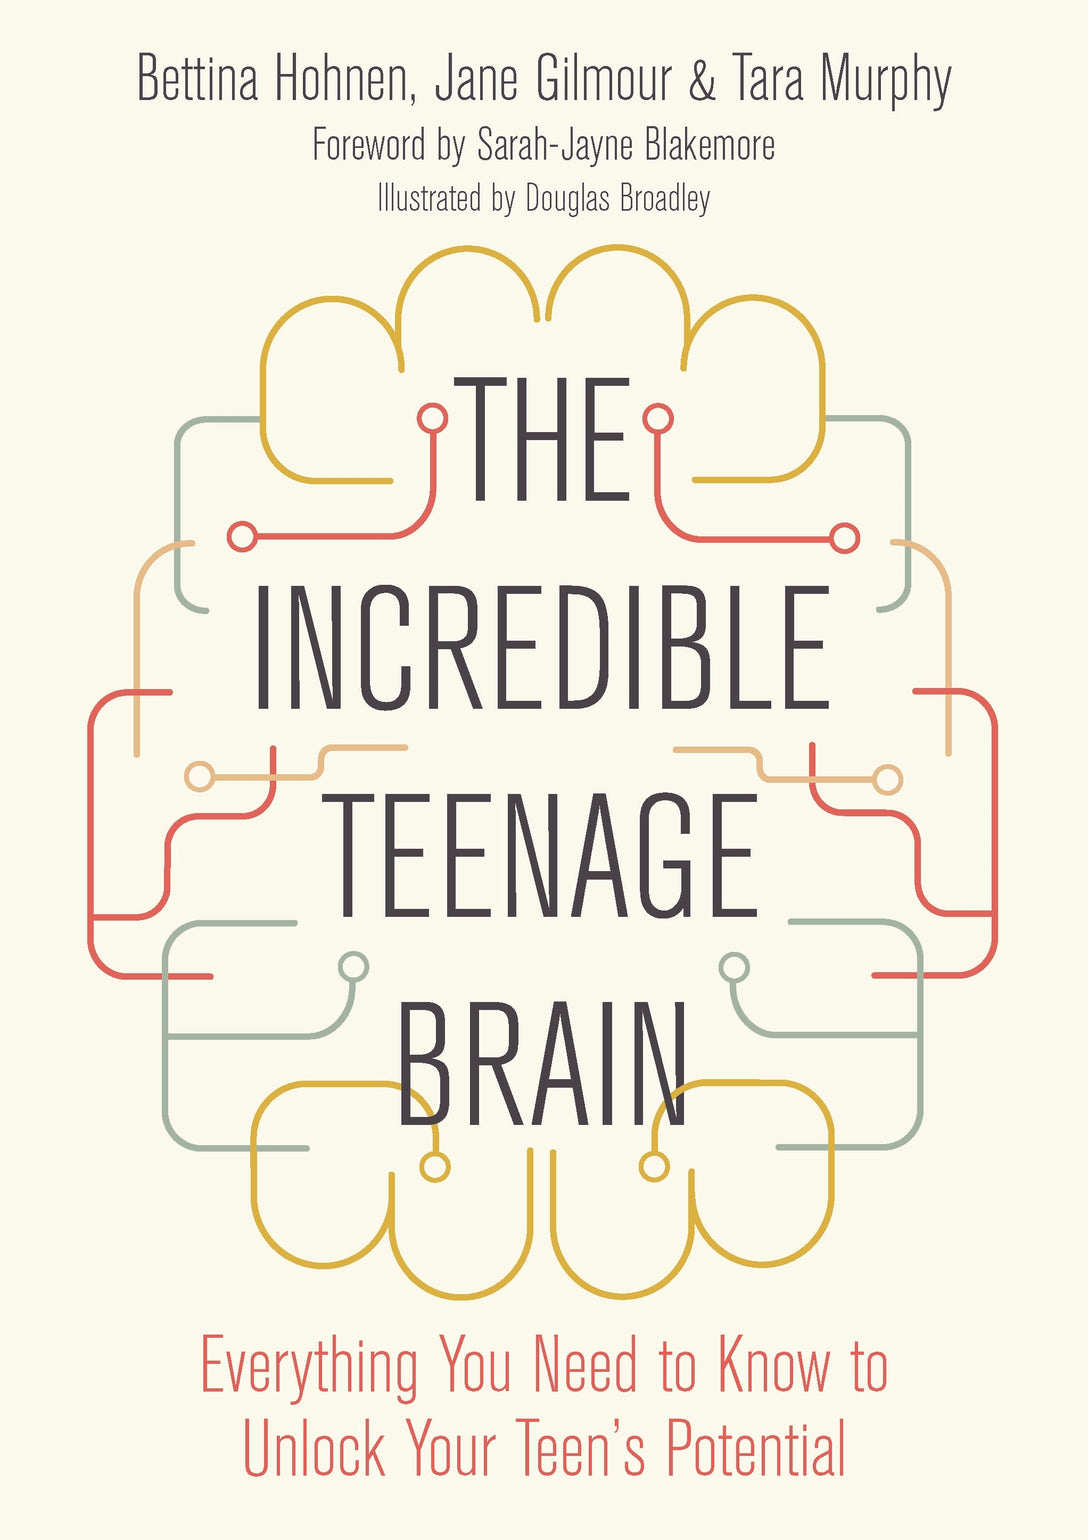 The Incredible Teenage Brain by Douglas Broadley, Sarah Jayne Blakemore, Tara Murphy, Jane Gilmour, Bettina Hohnen